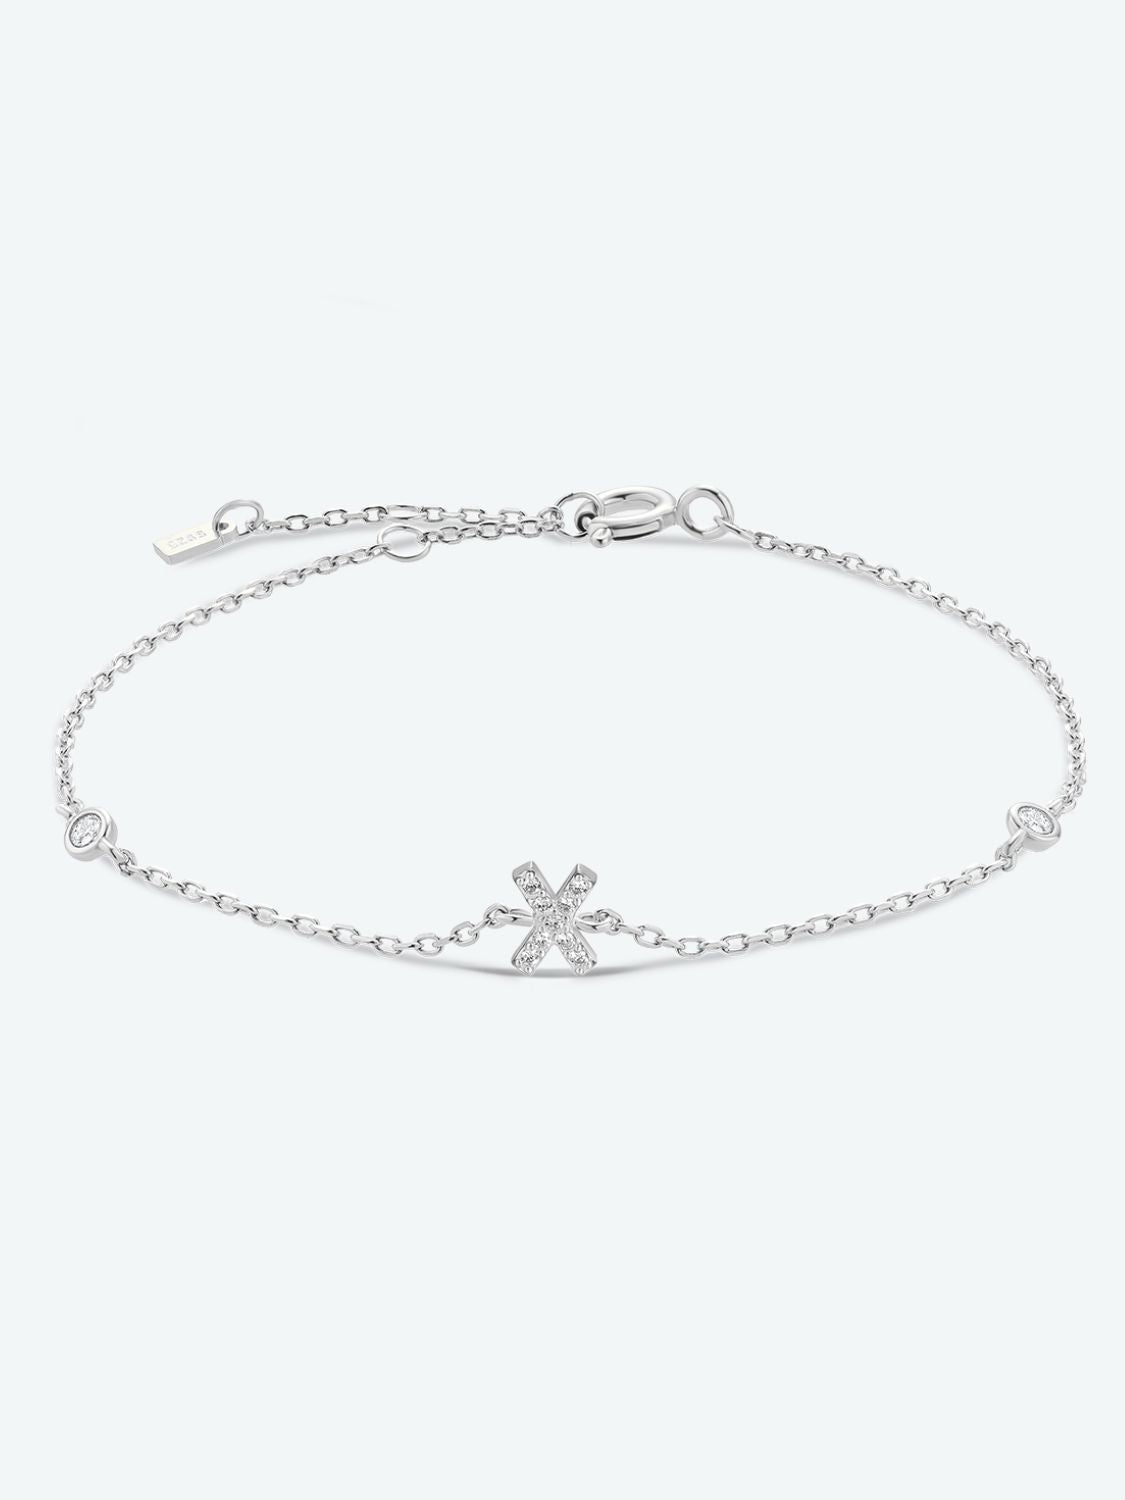 V To Z Zircon 925 Sterling Silver Bracelet - X/Silver / One Size - Women’s Jewelry - Bracelets - 16 - 2024